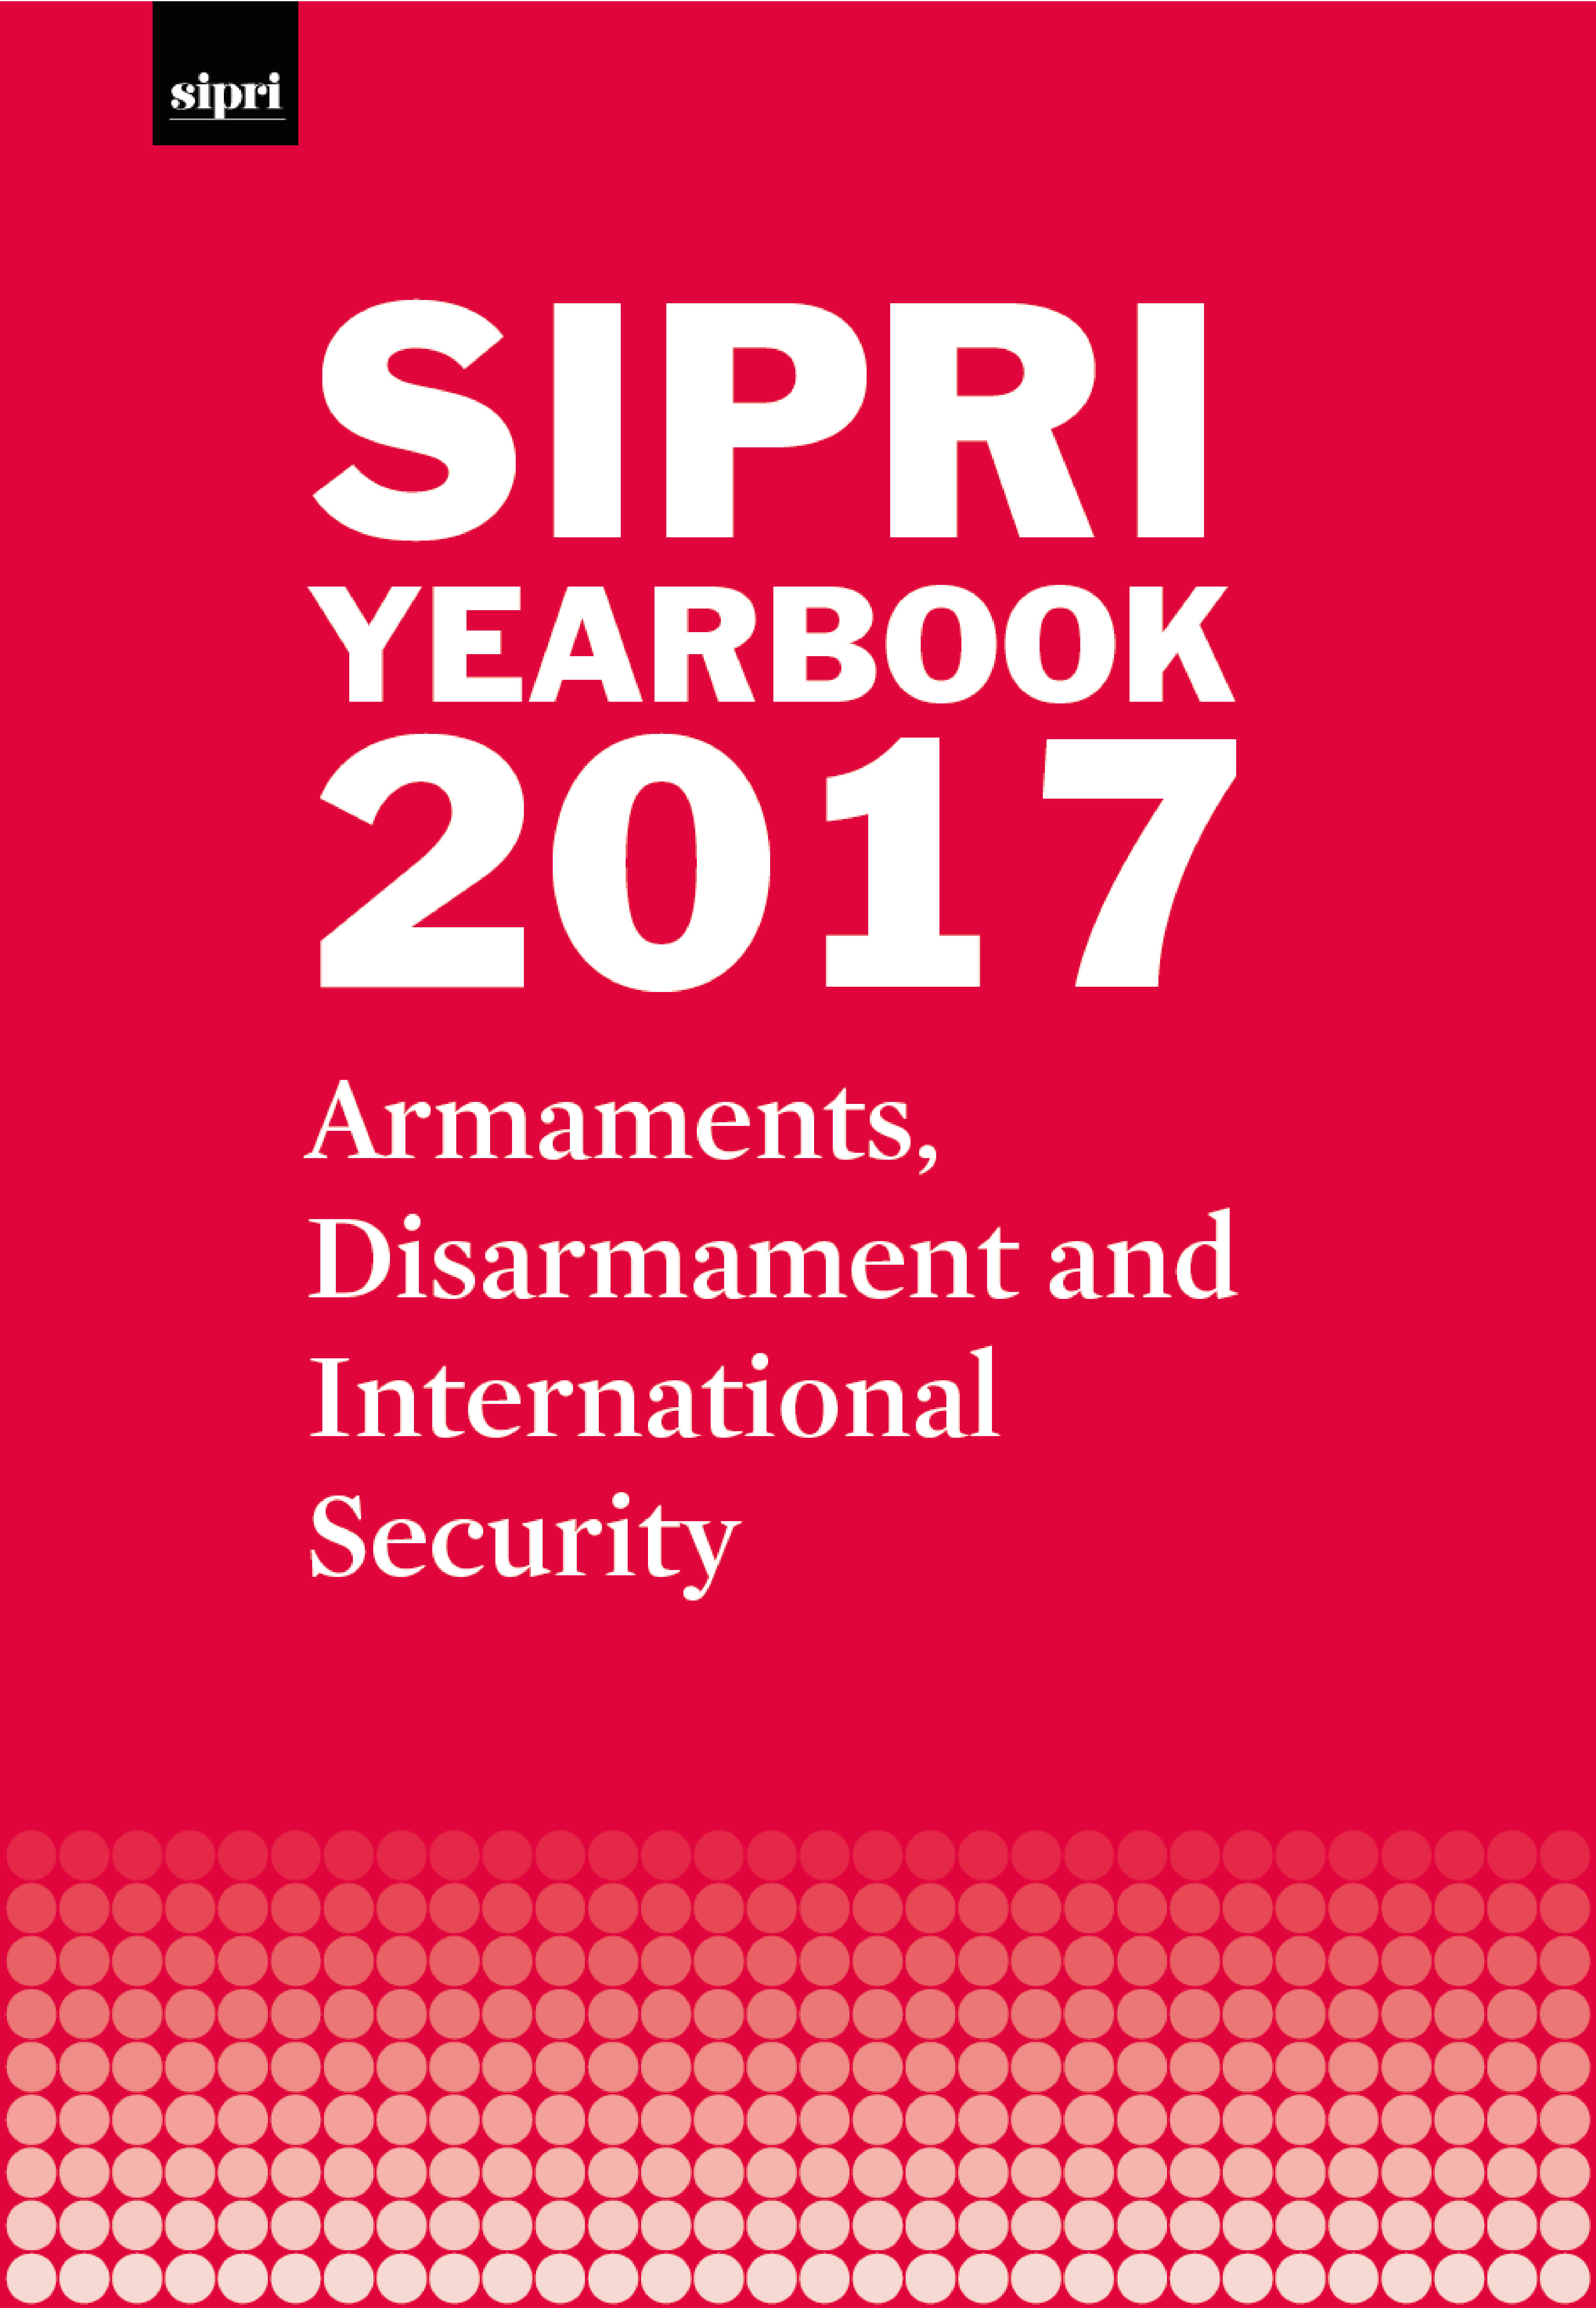 SIPRI publication